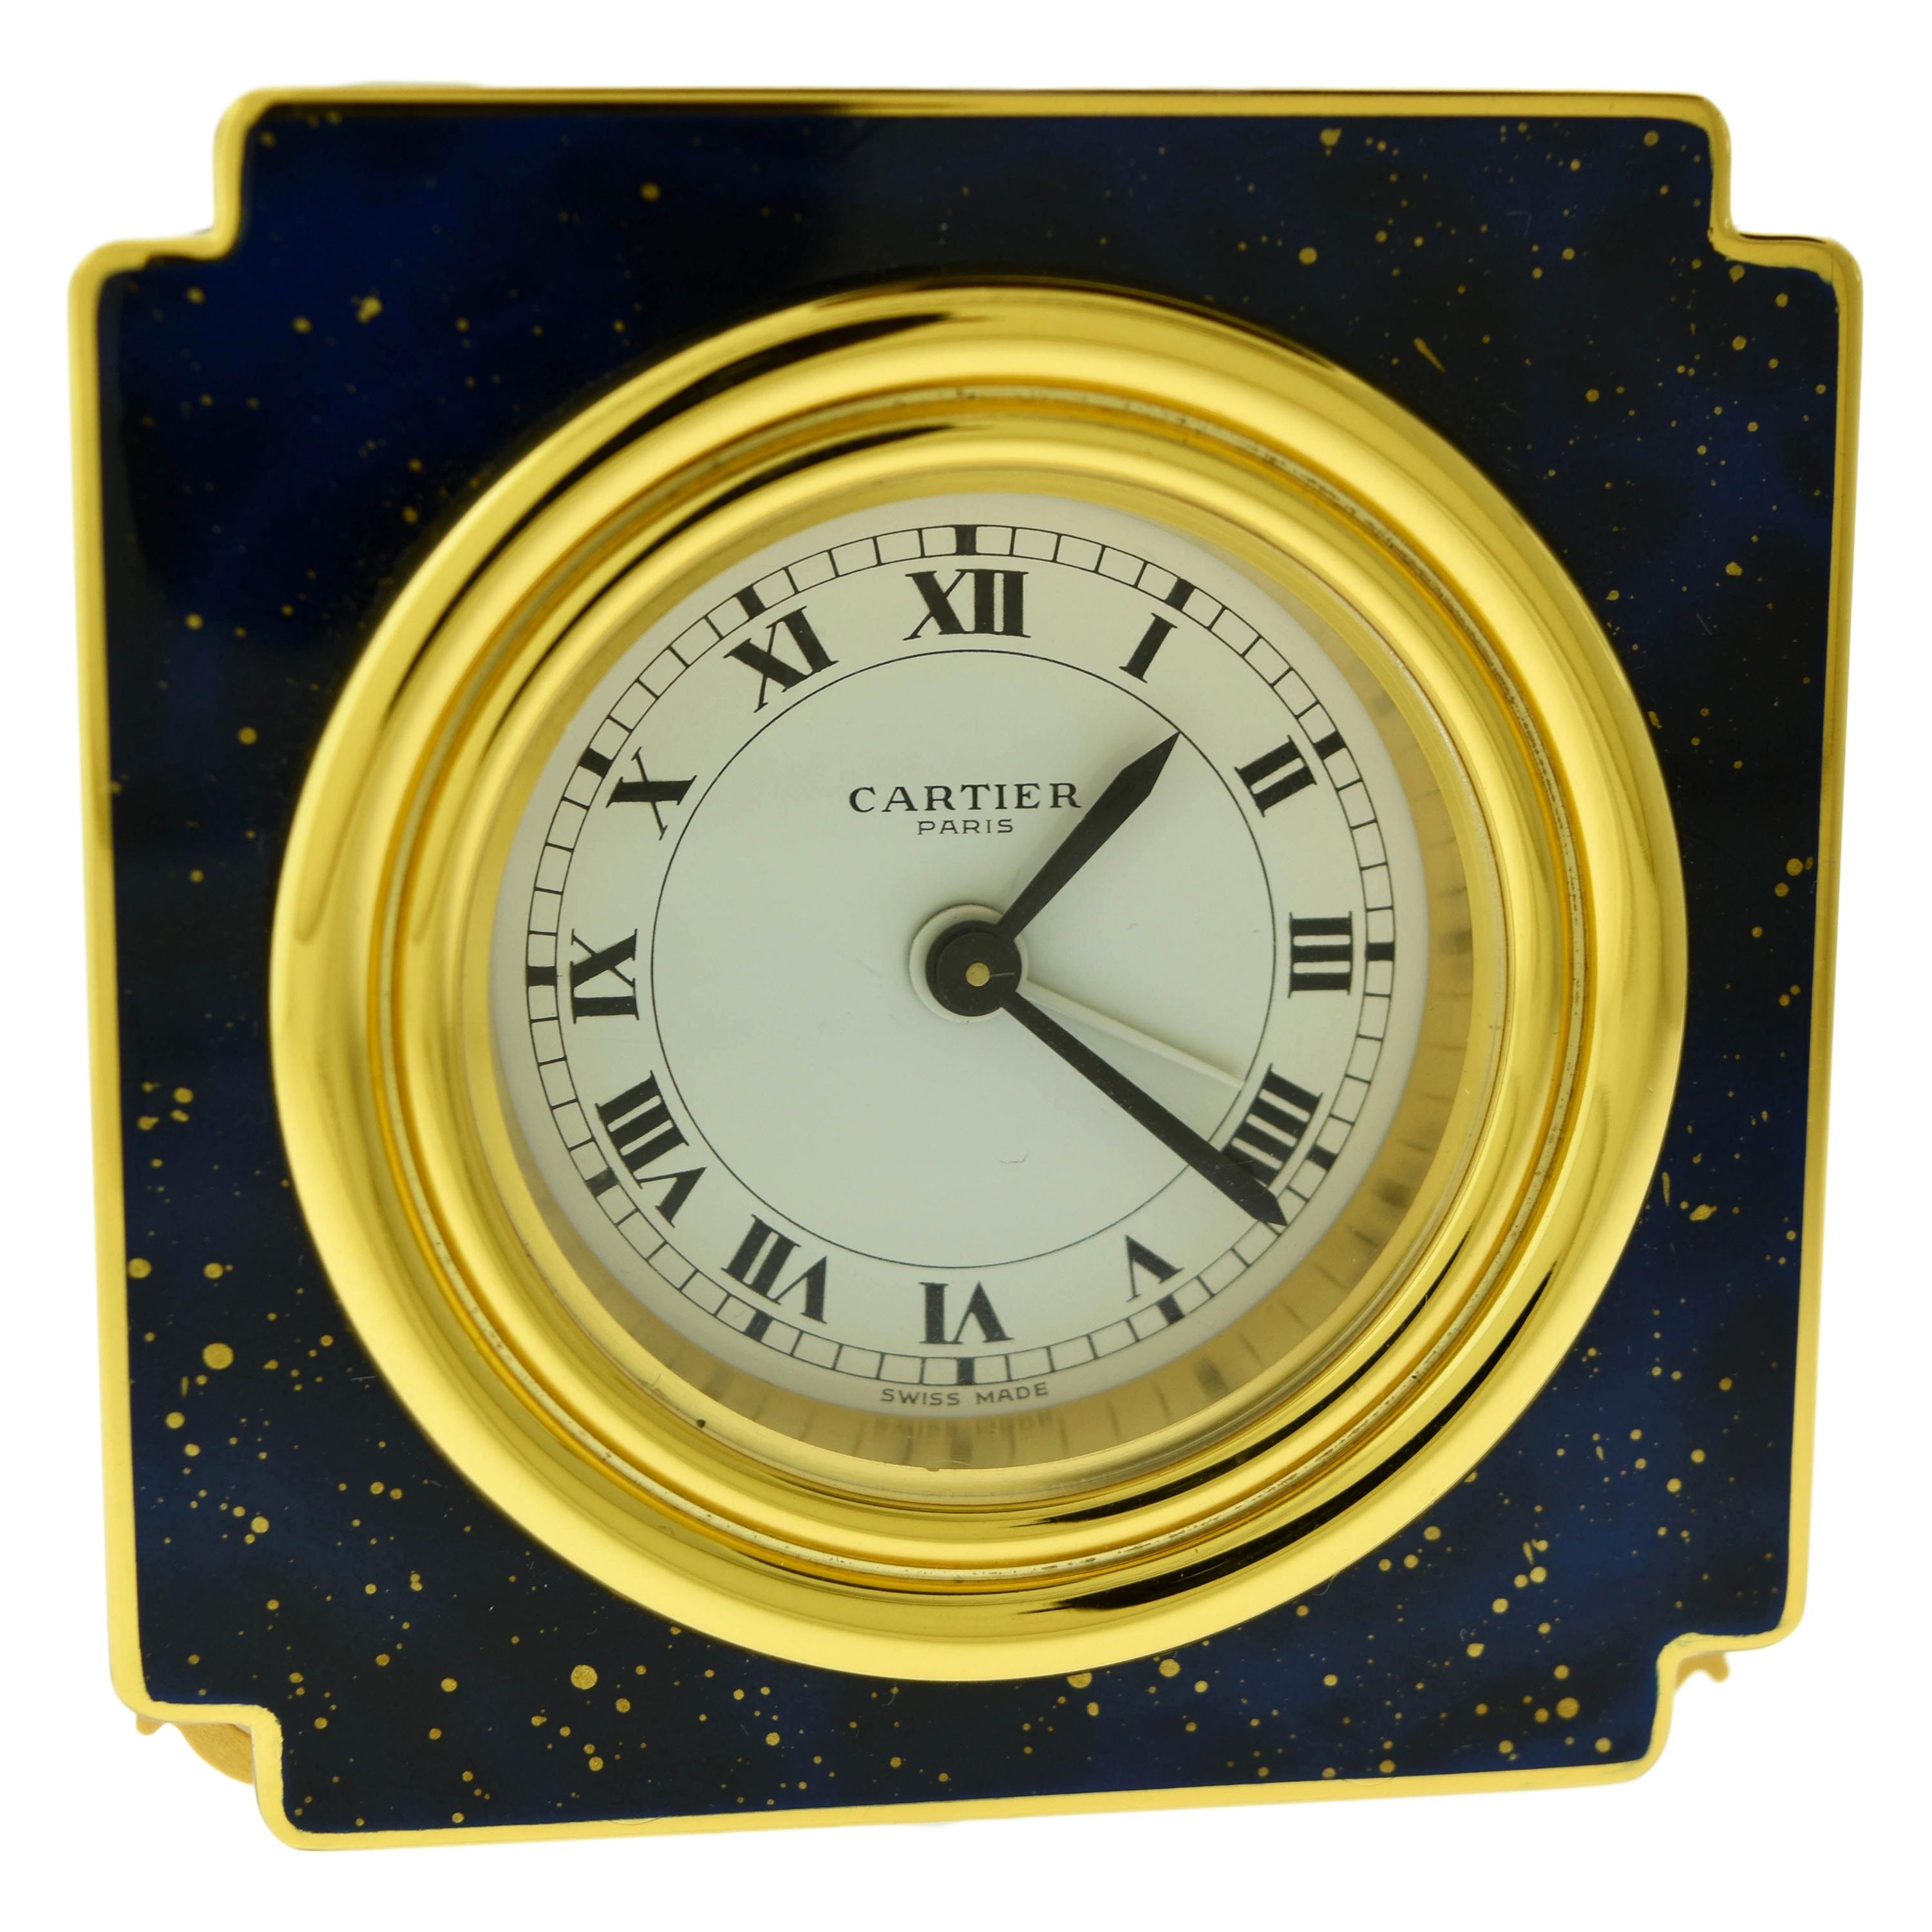 Cartier Les Must De Cartier 18K Gold-Plated and Enamel Desk Clock